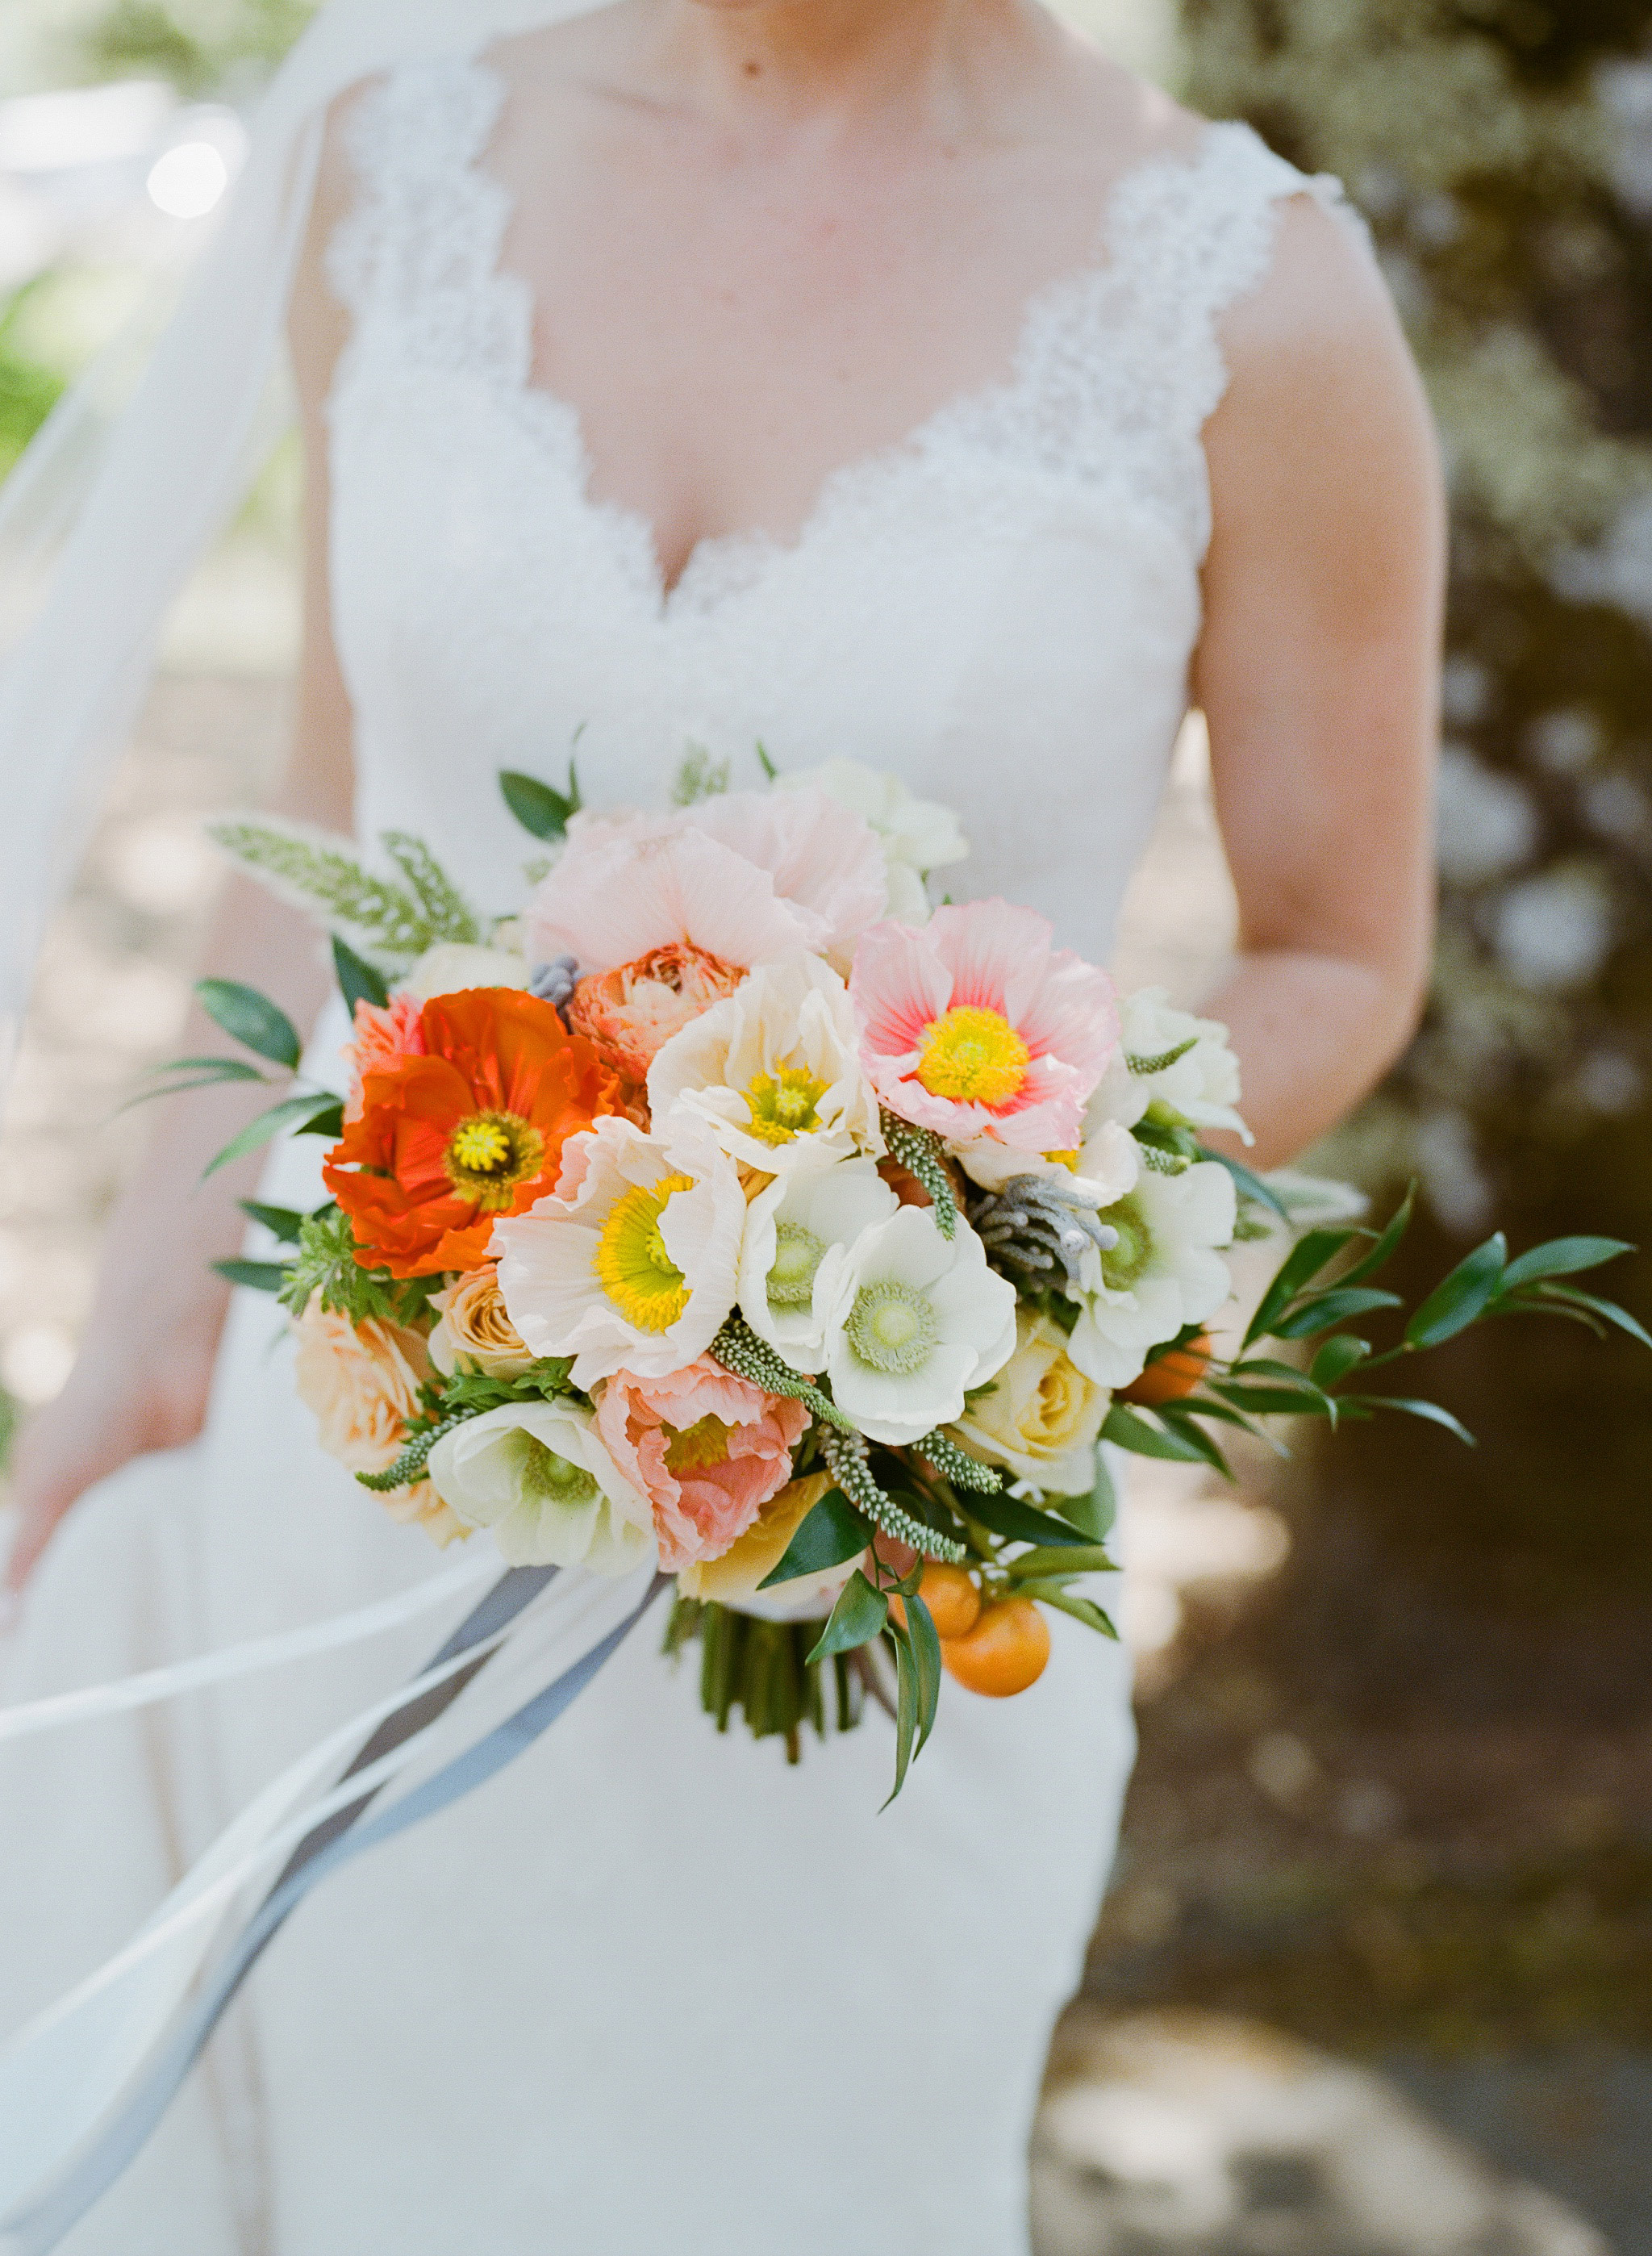 A Summer of Blooms: Summer Wedding Bouquets